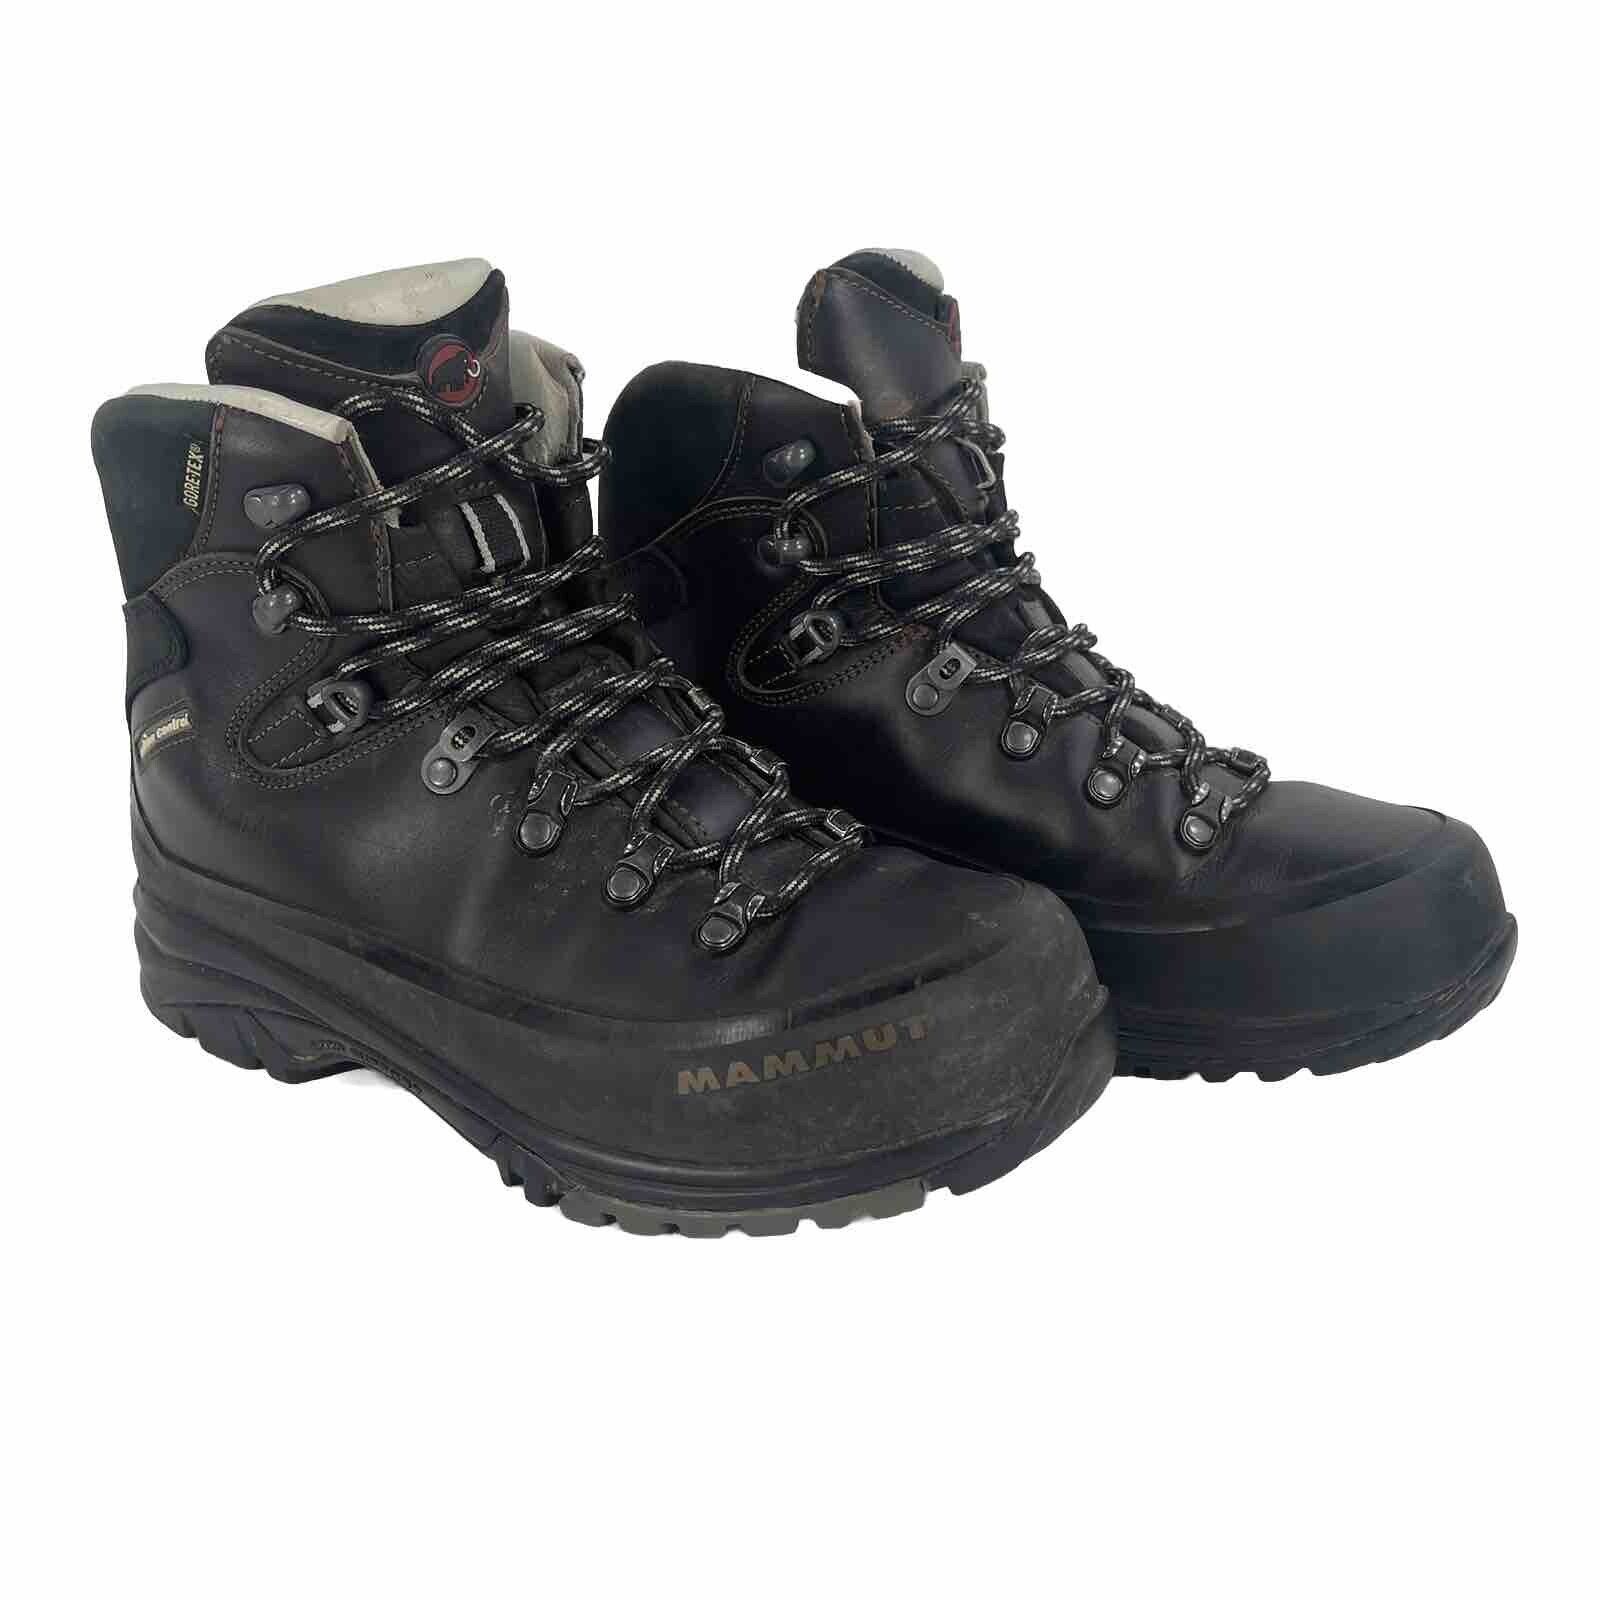 Raichle Mammut Gore-Tex Vibram Leather MT Trail XT Hiking Boots Mens Size 8